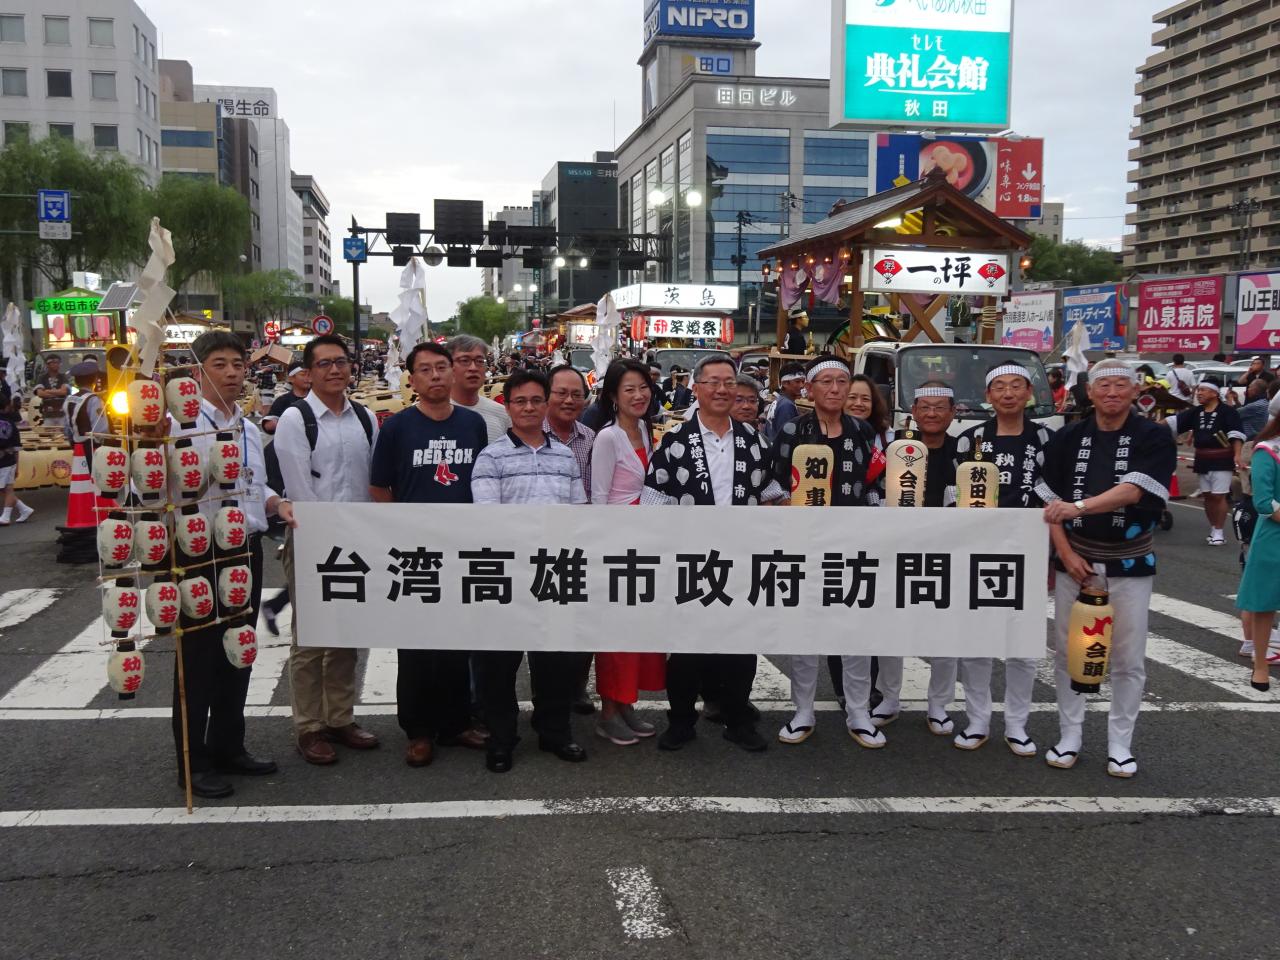 台湾高雄市政府訪問団の竿灯祭り参加の様子